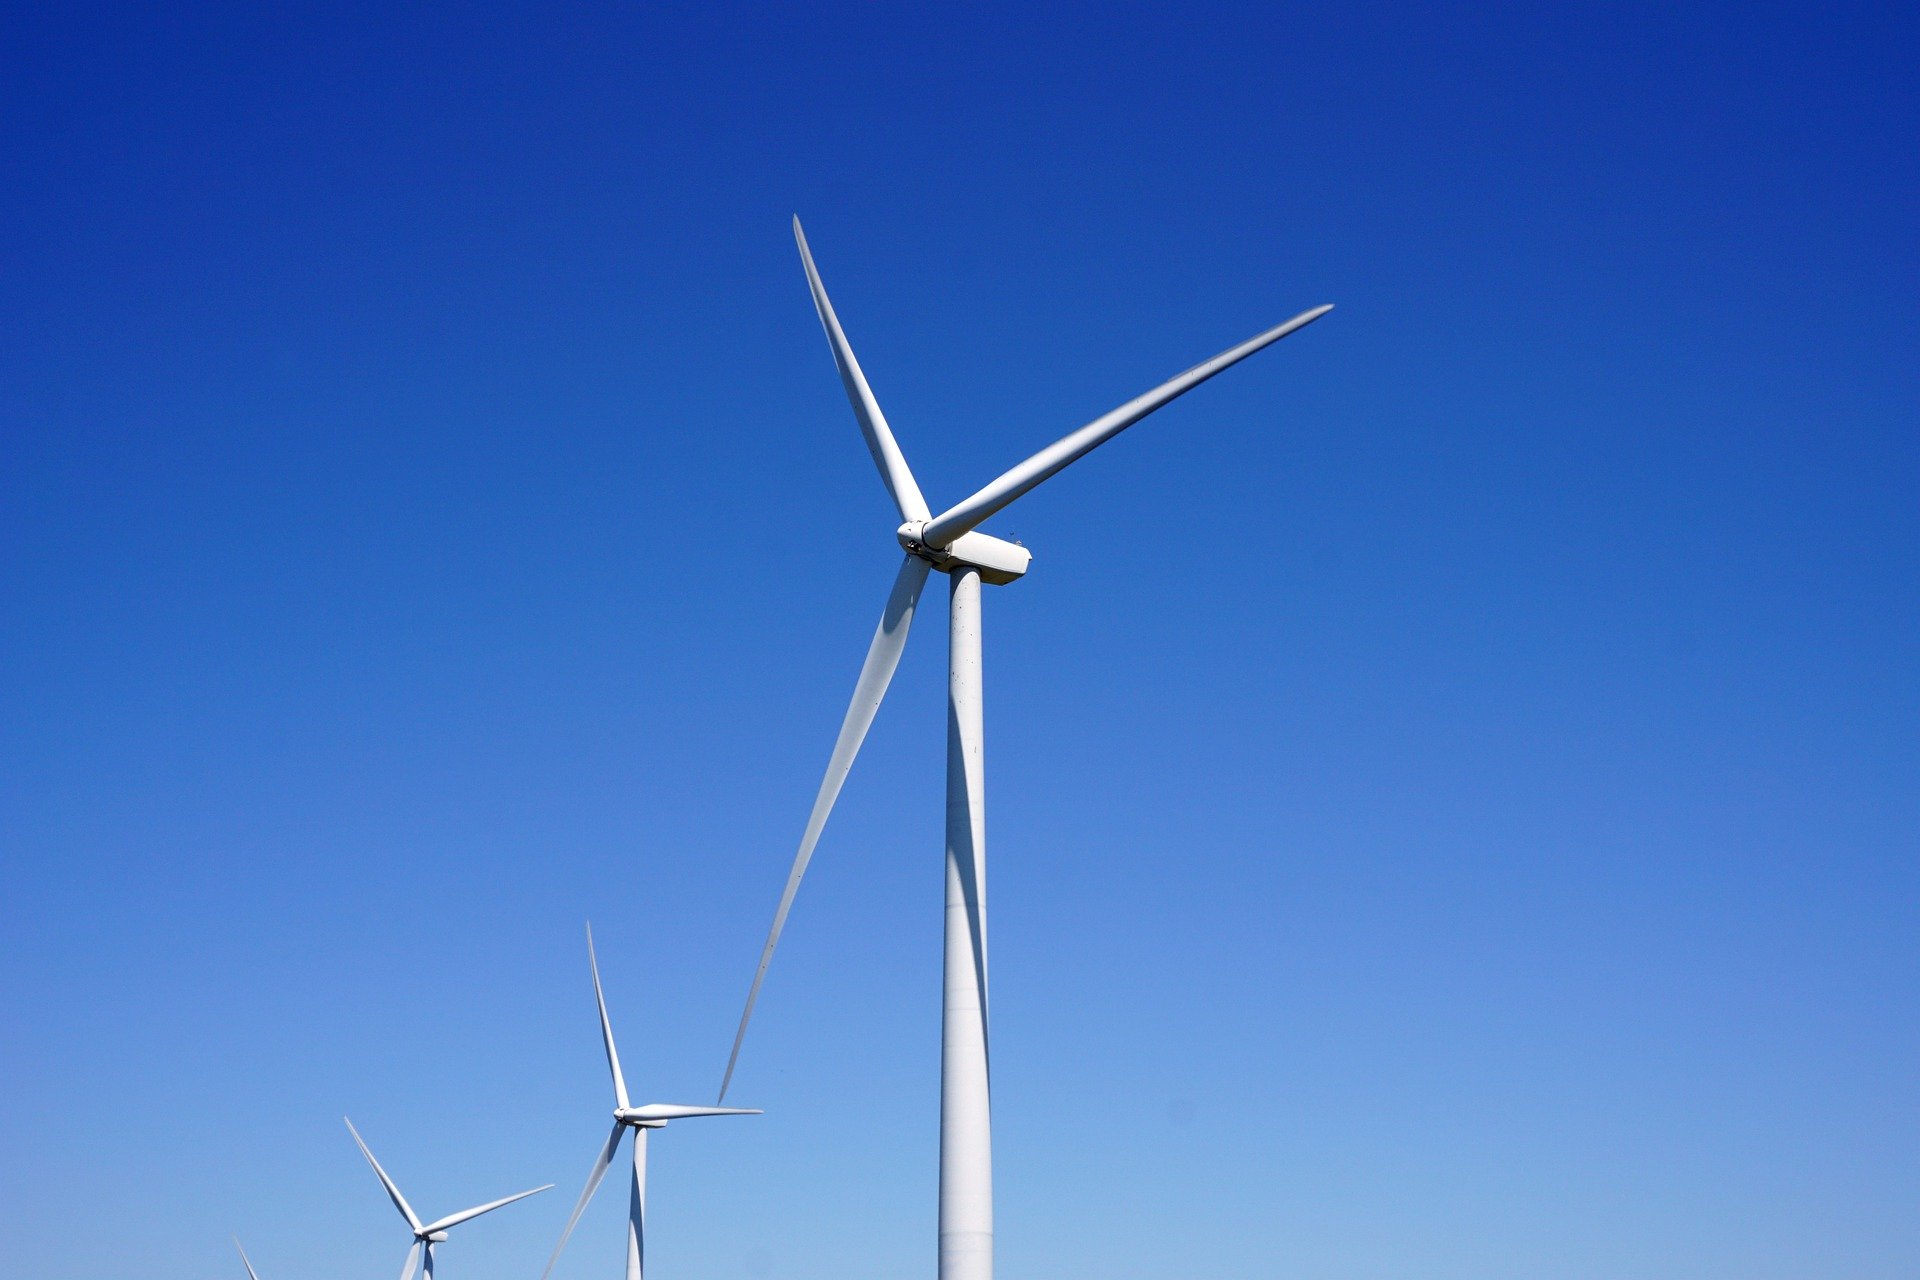 A wind turbine against a blue sky